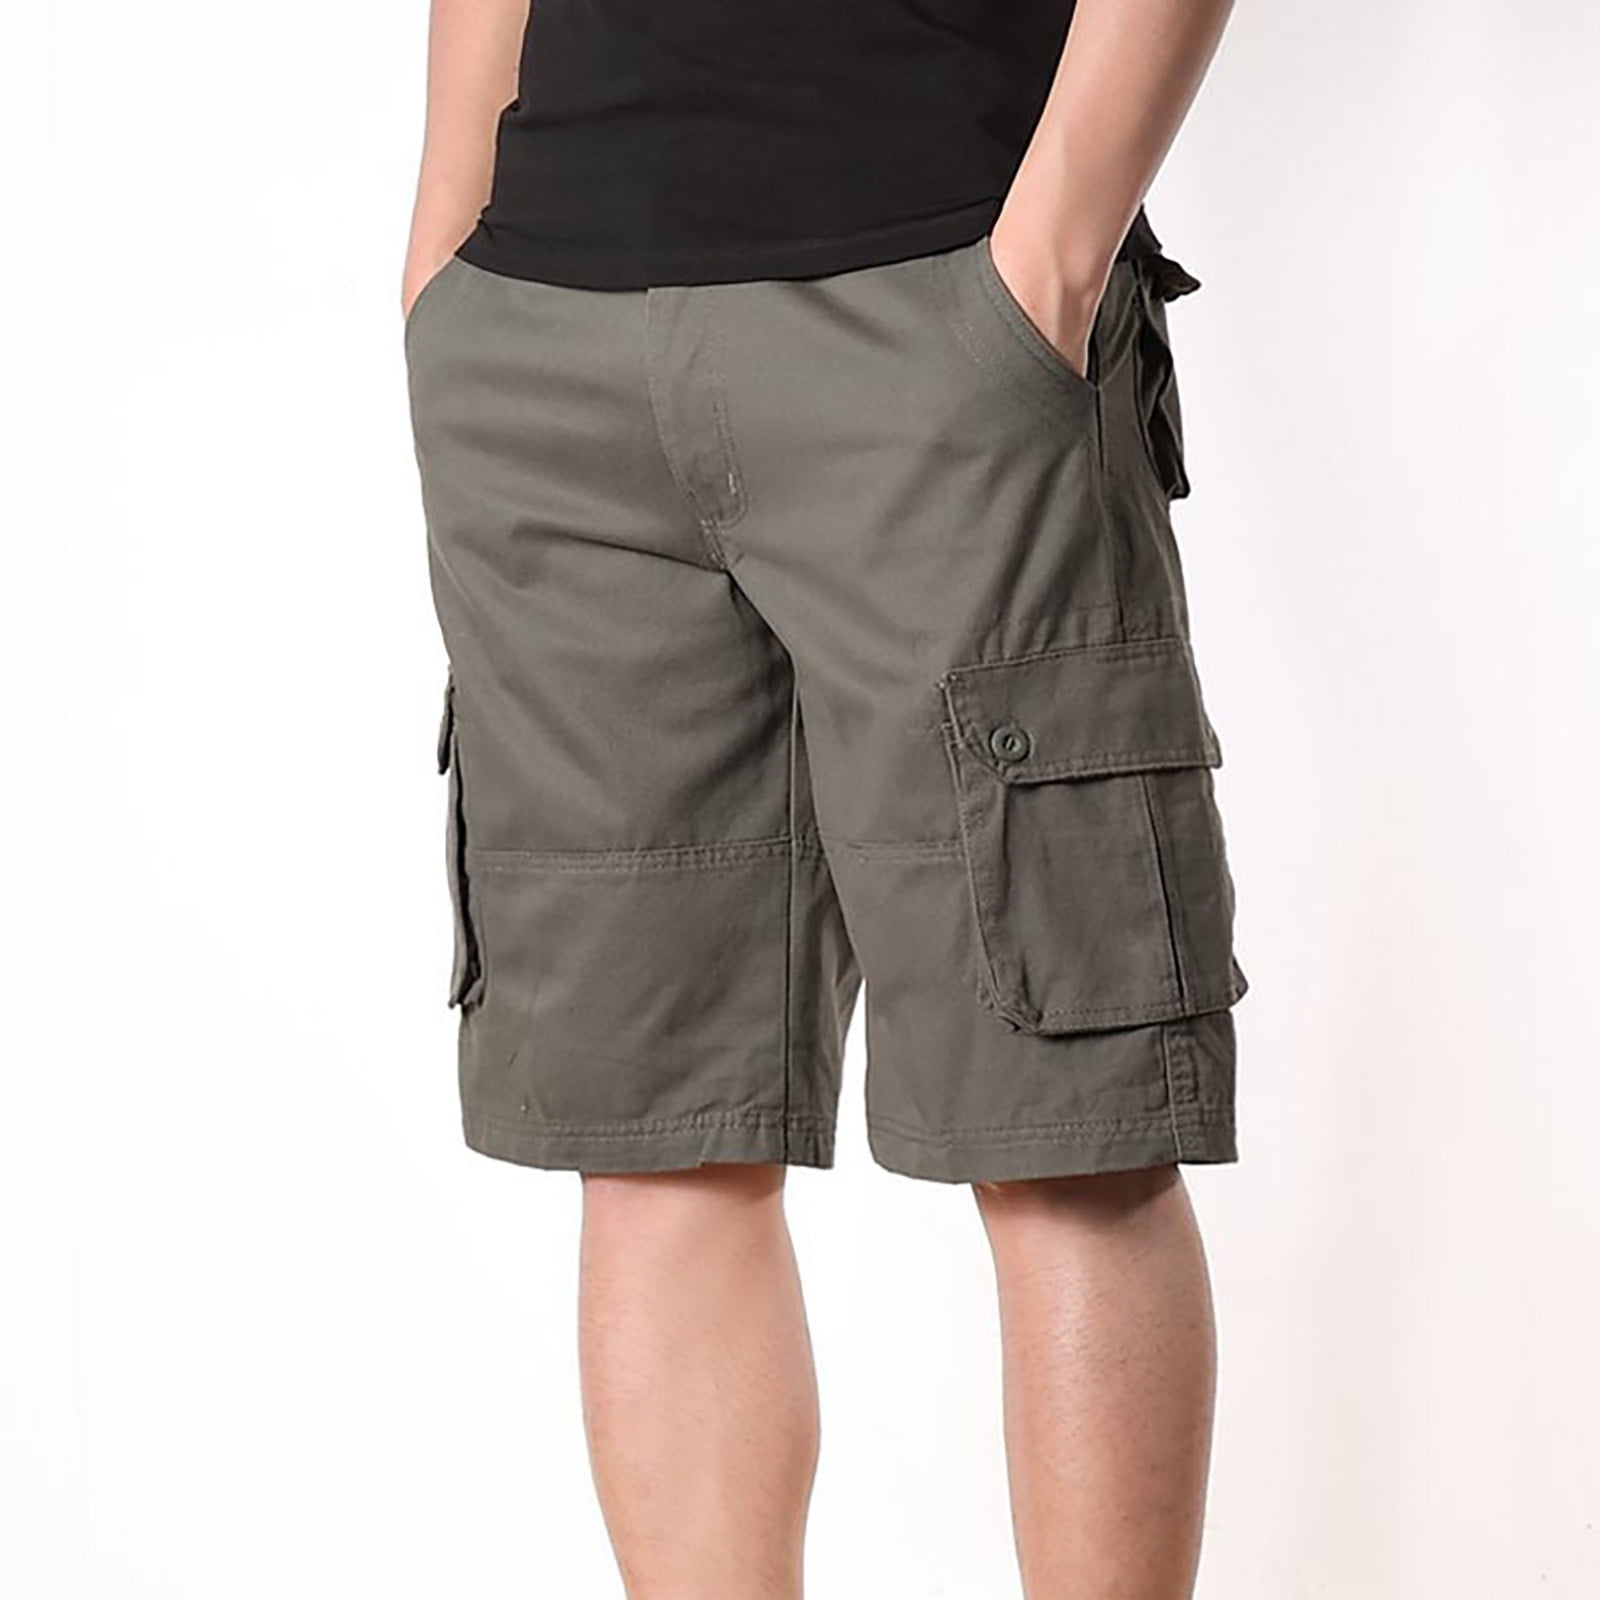 Hvyesh Men's Cargo Shorts Relaxed Fit Multi Pockets Shorts Work Combat ...